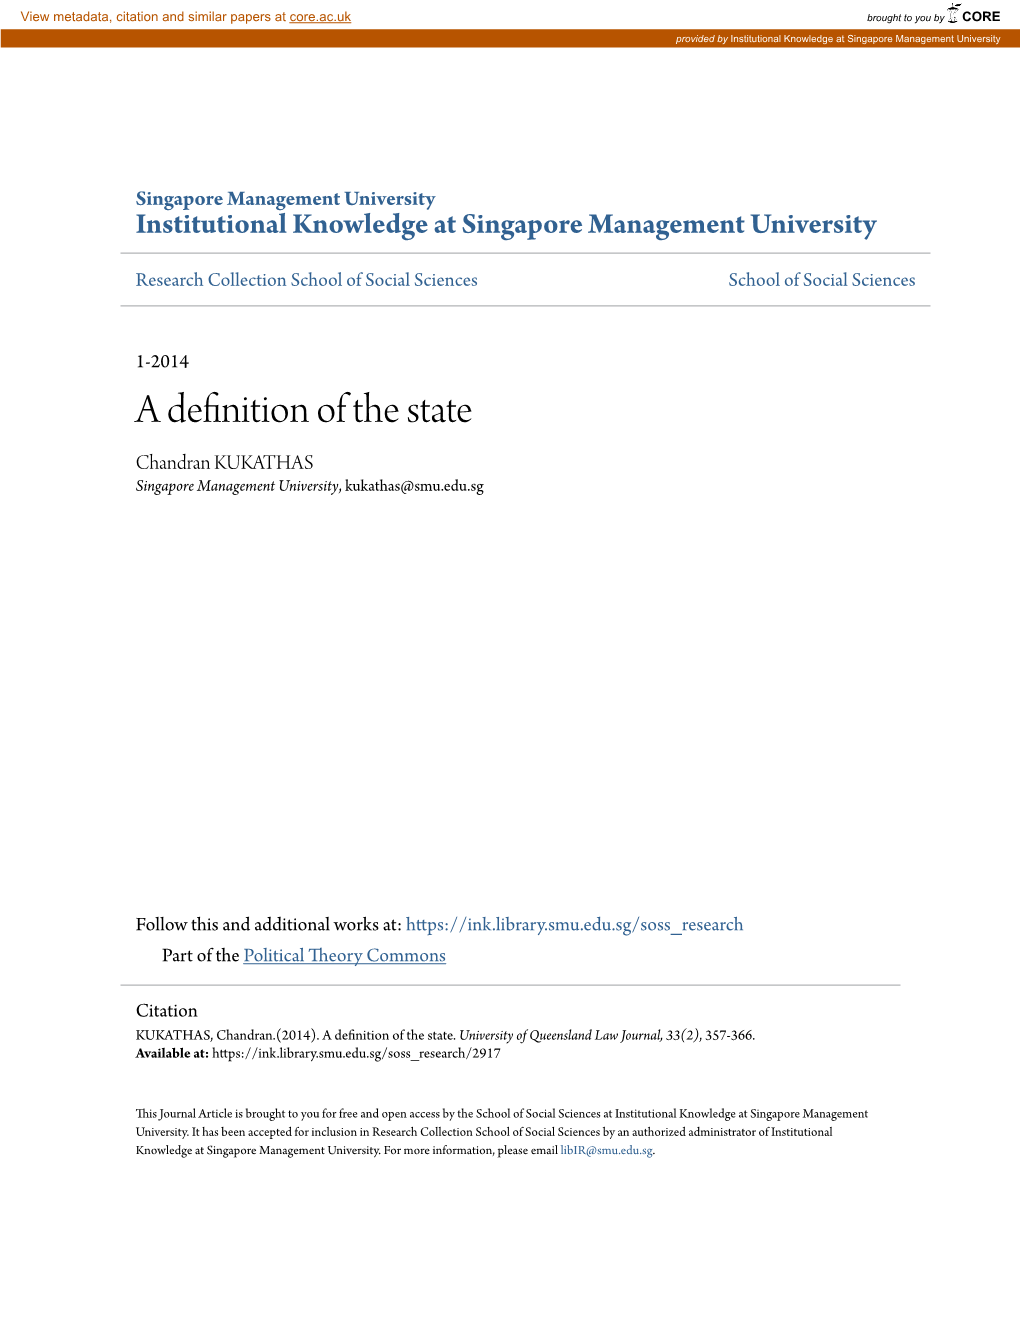 A Definition of the State Chandran KUKATHAS Singapore Management University, Kukathas@Smu.Edu.Sg